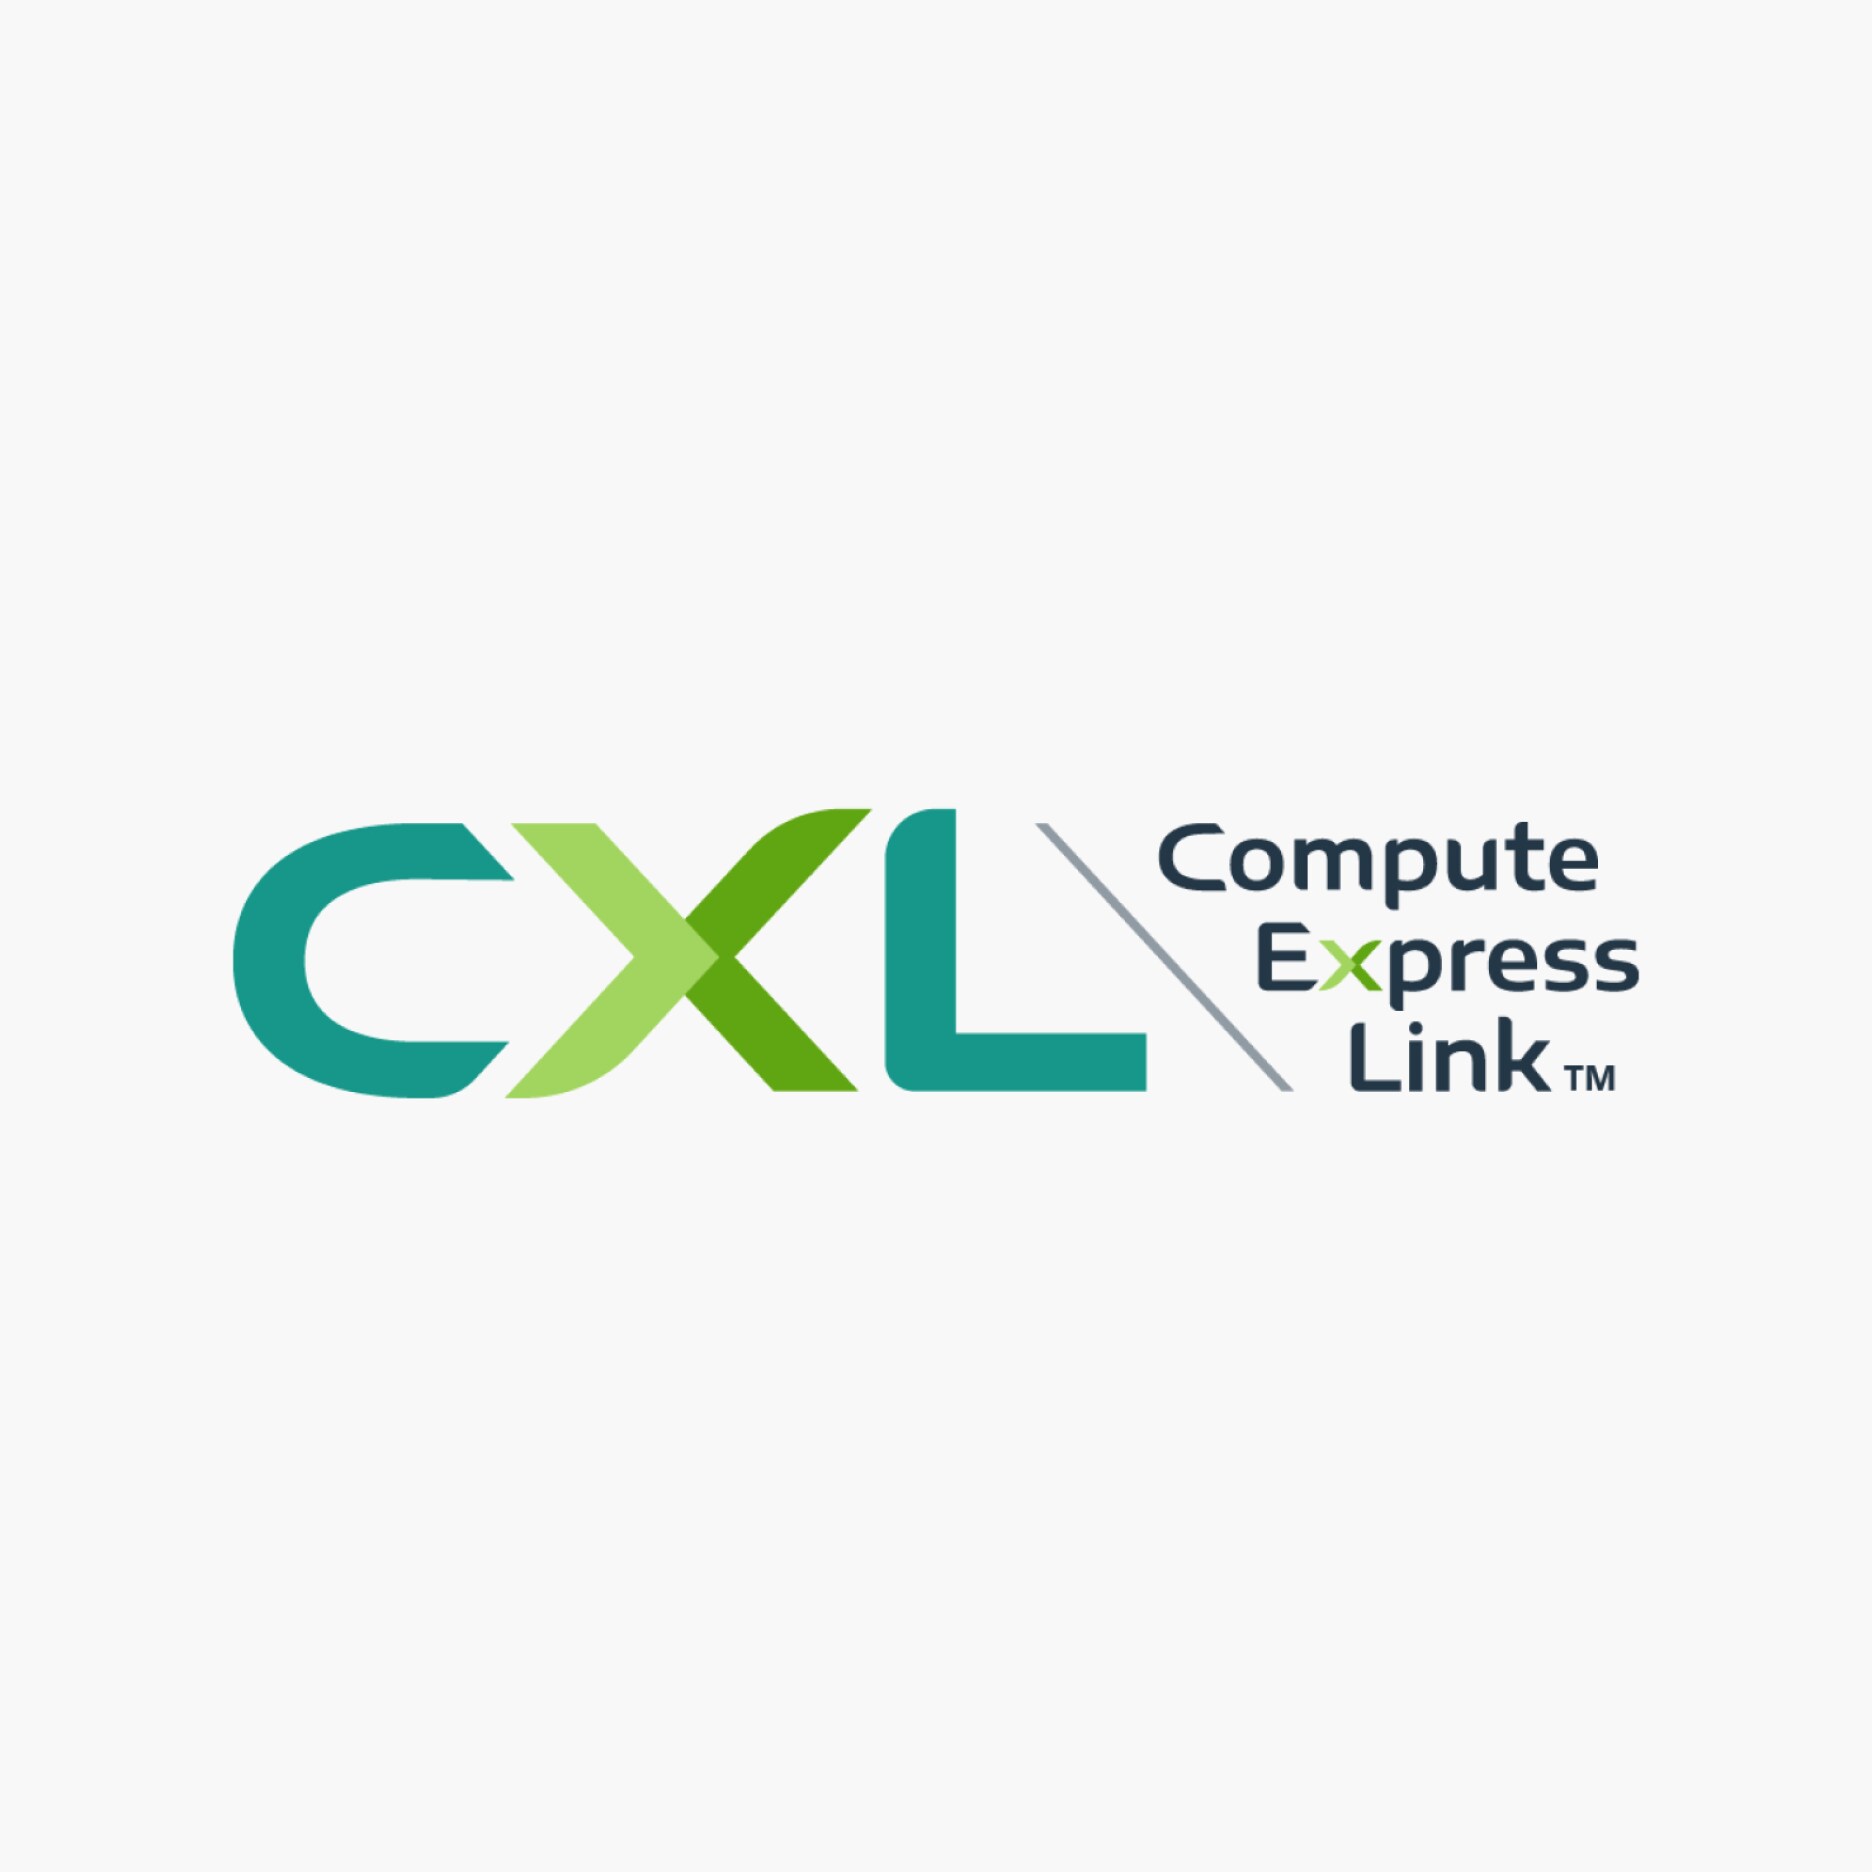 CXL logo image